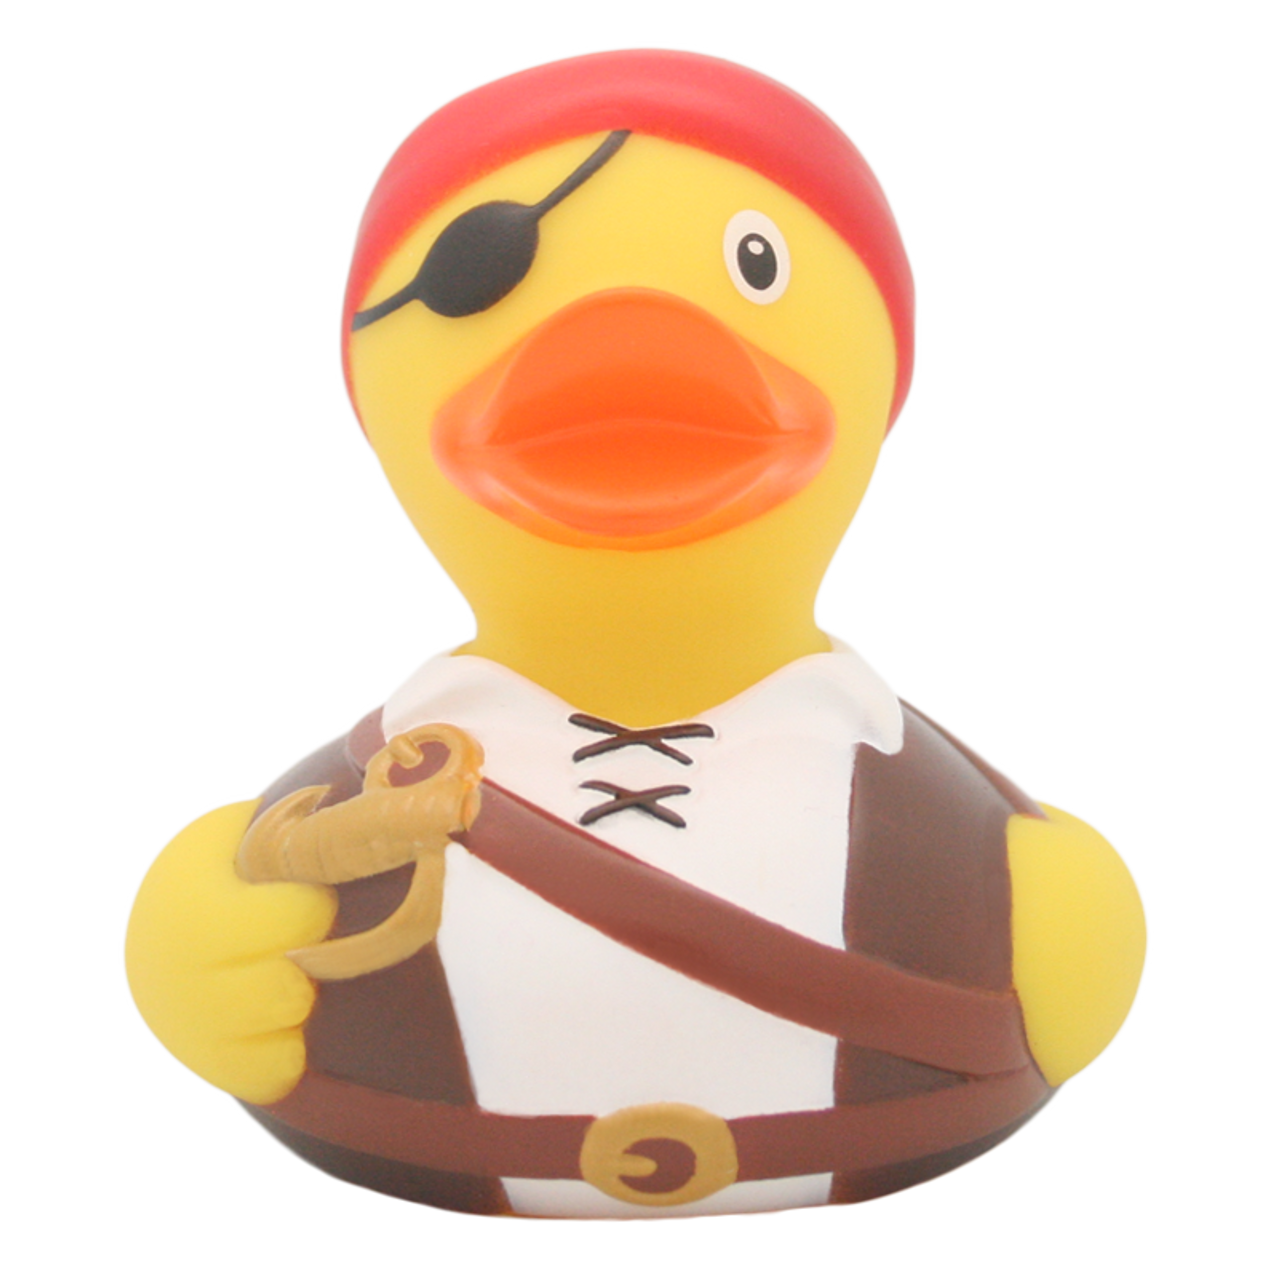 Rubber Duck Pirate - Wild Republic